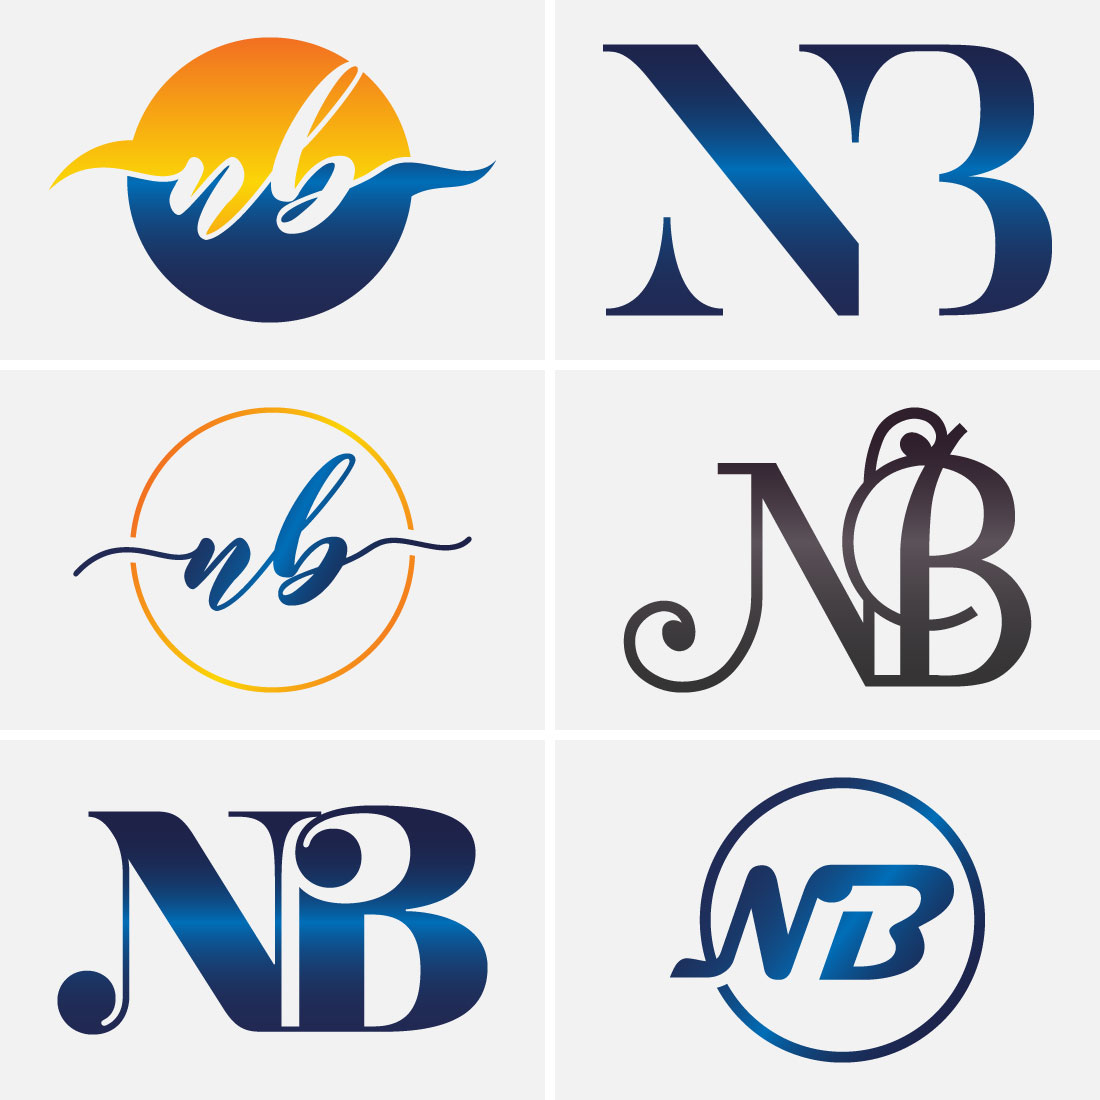 Bn b n letter logo design with a creative cut Vector Image